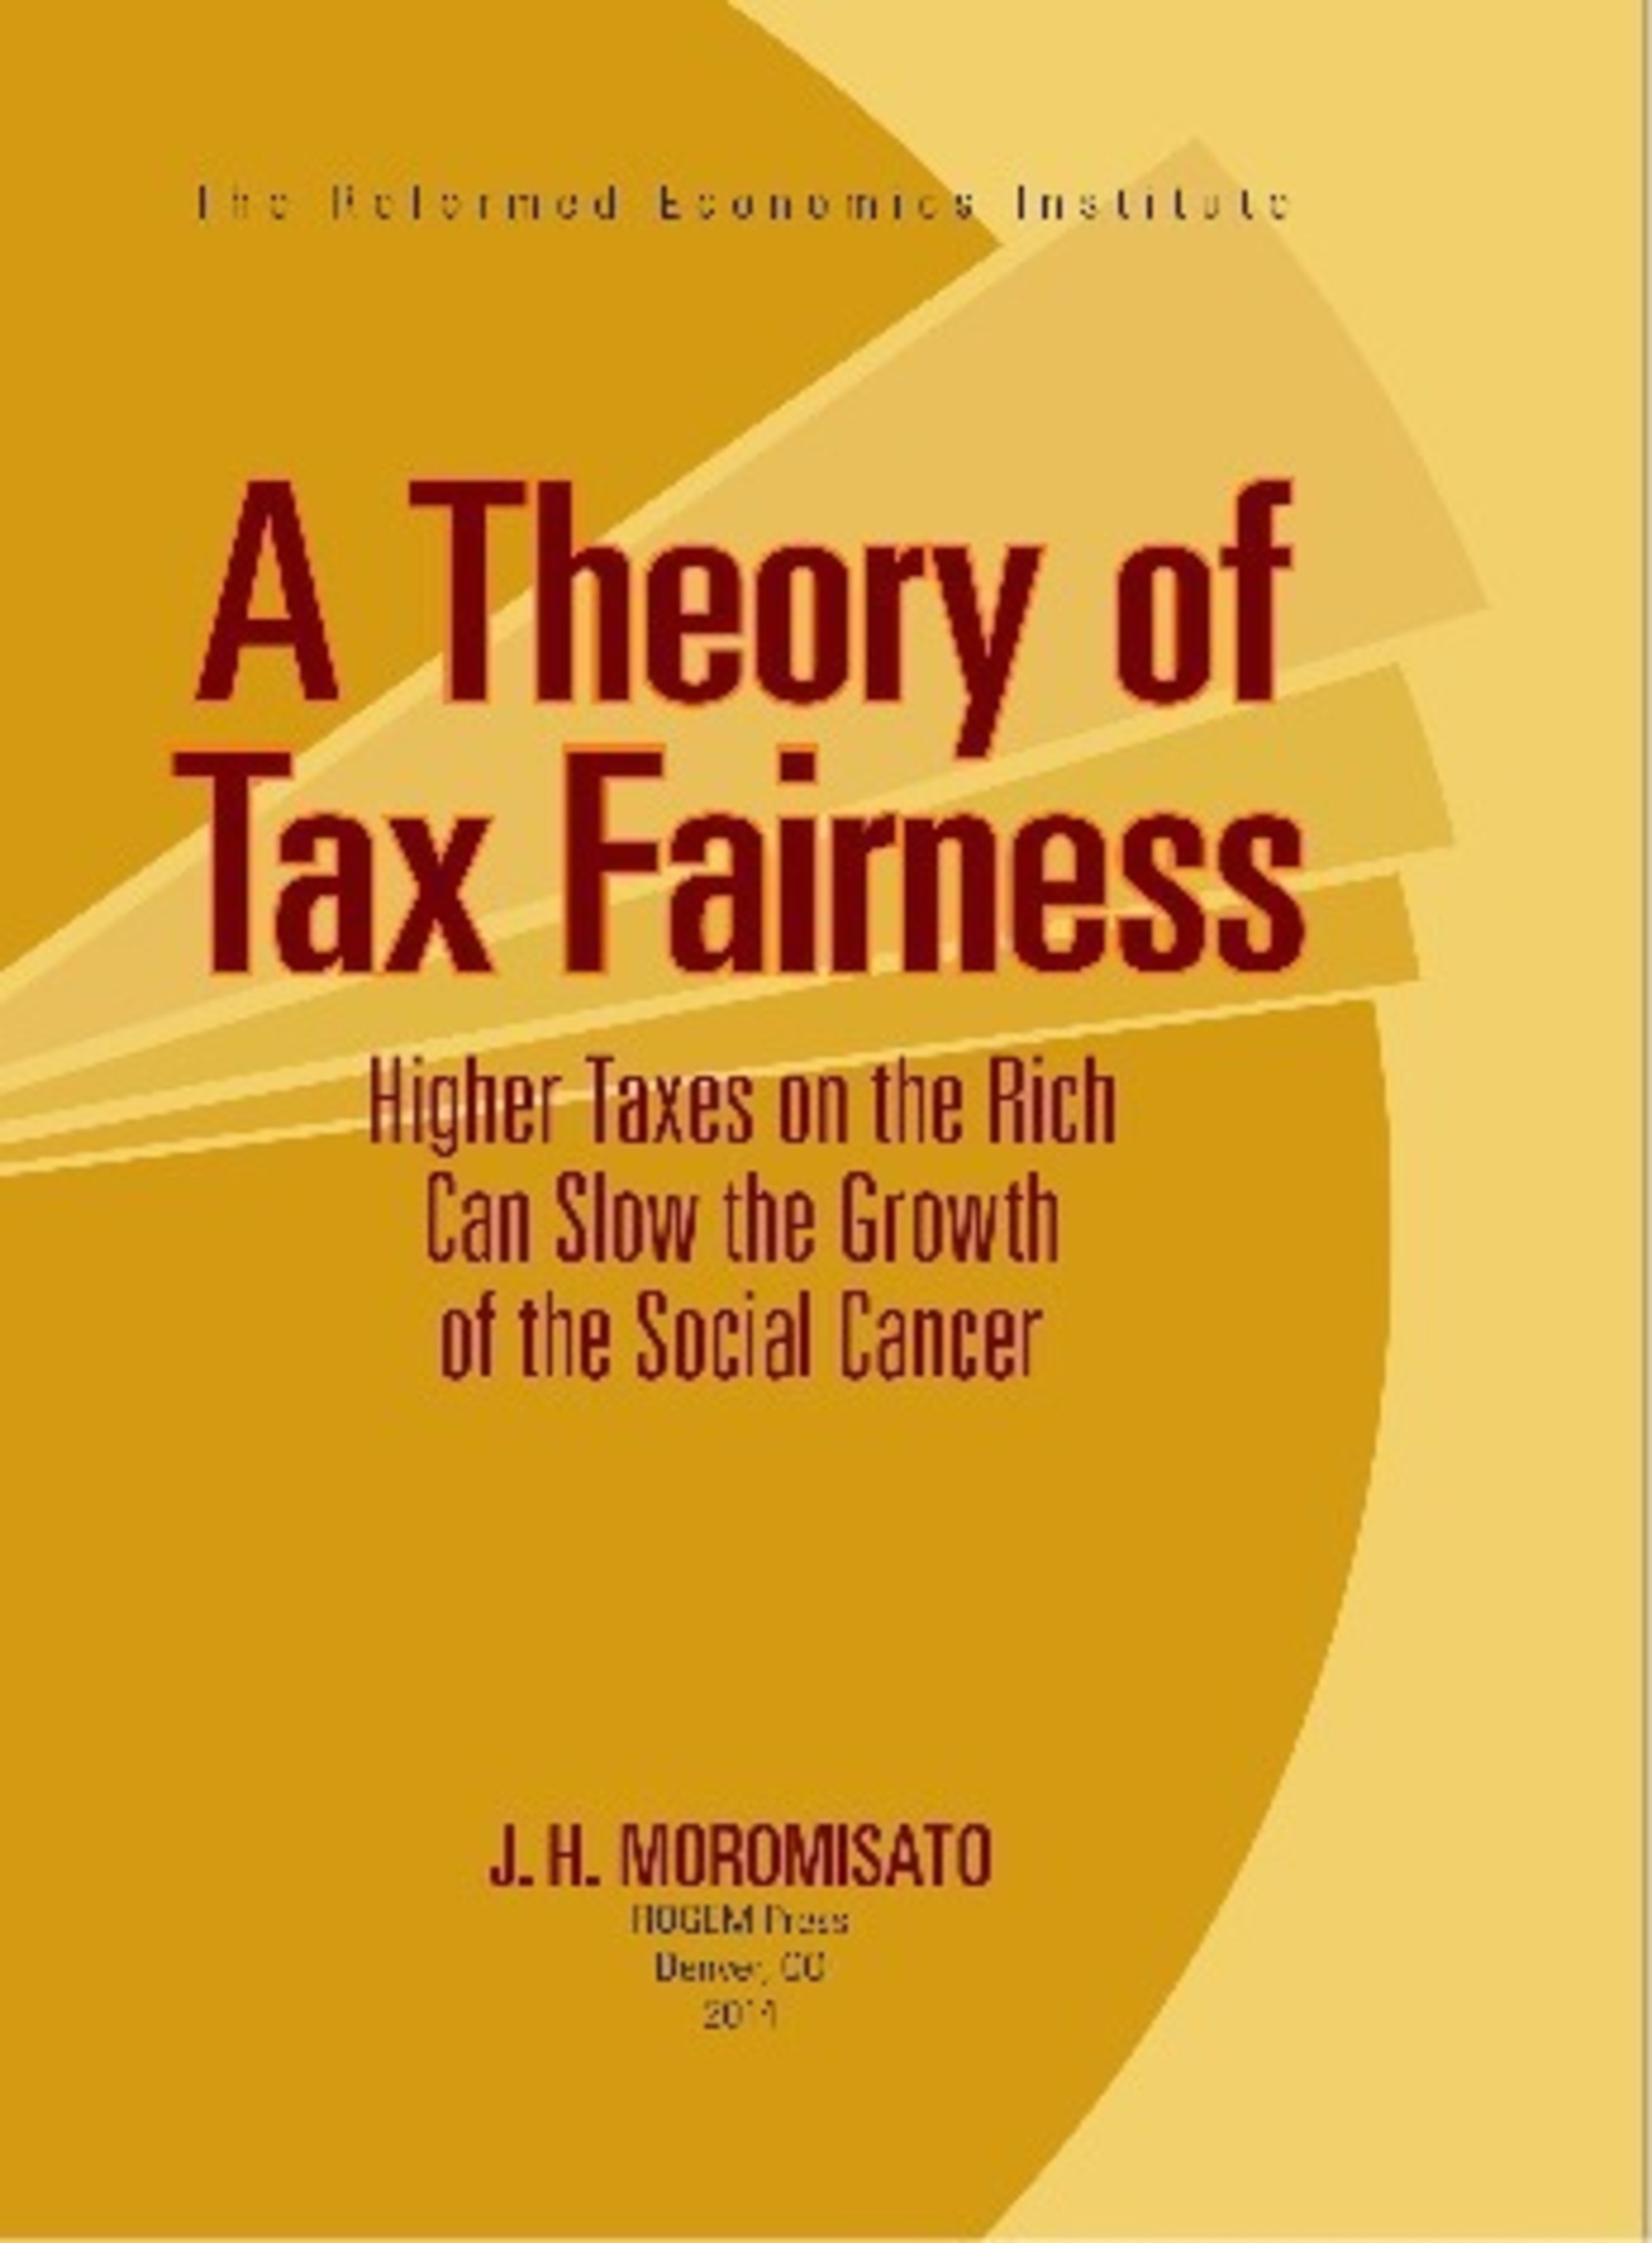 A Theory of Tax Fairness Cover (PRNewsFoto/Dr. J. H. Moromisato)